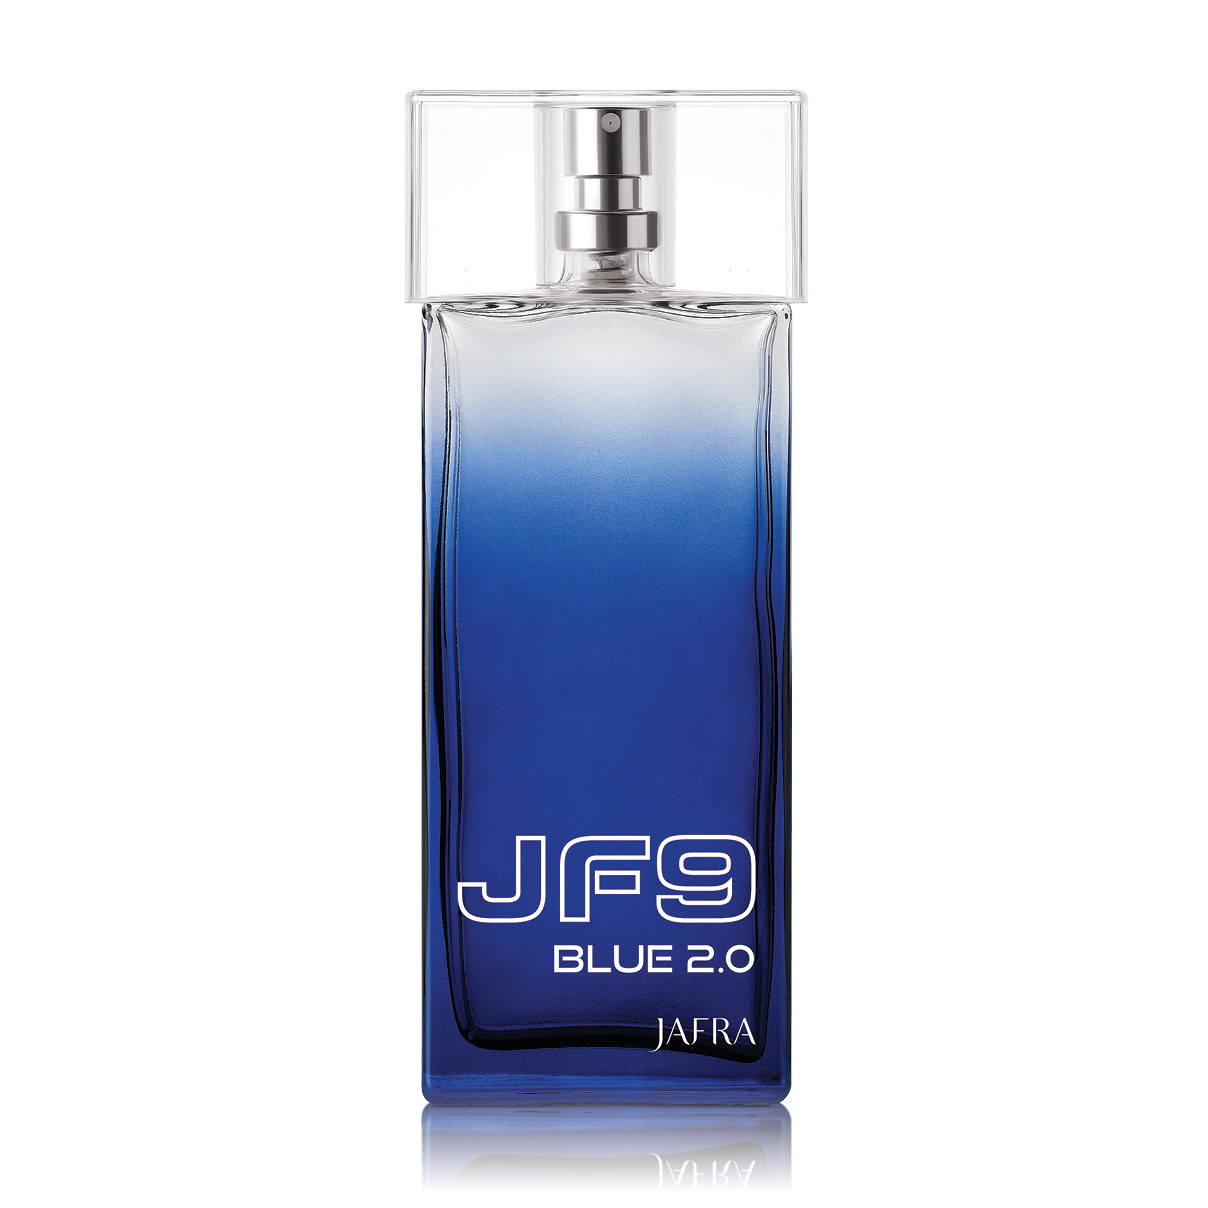 JF9 Blue 2.0 EDP